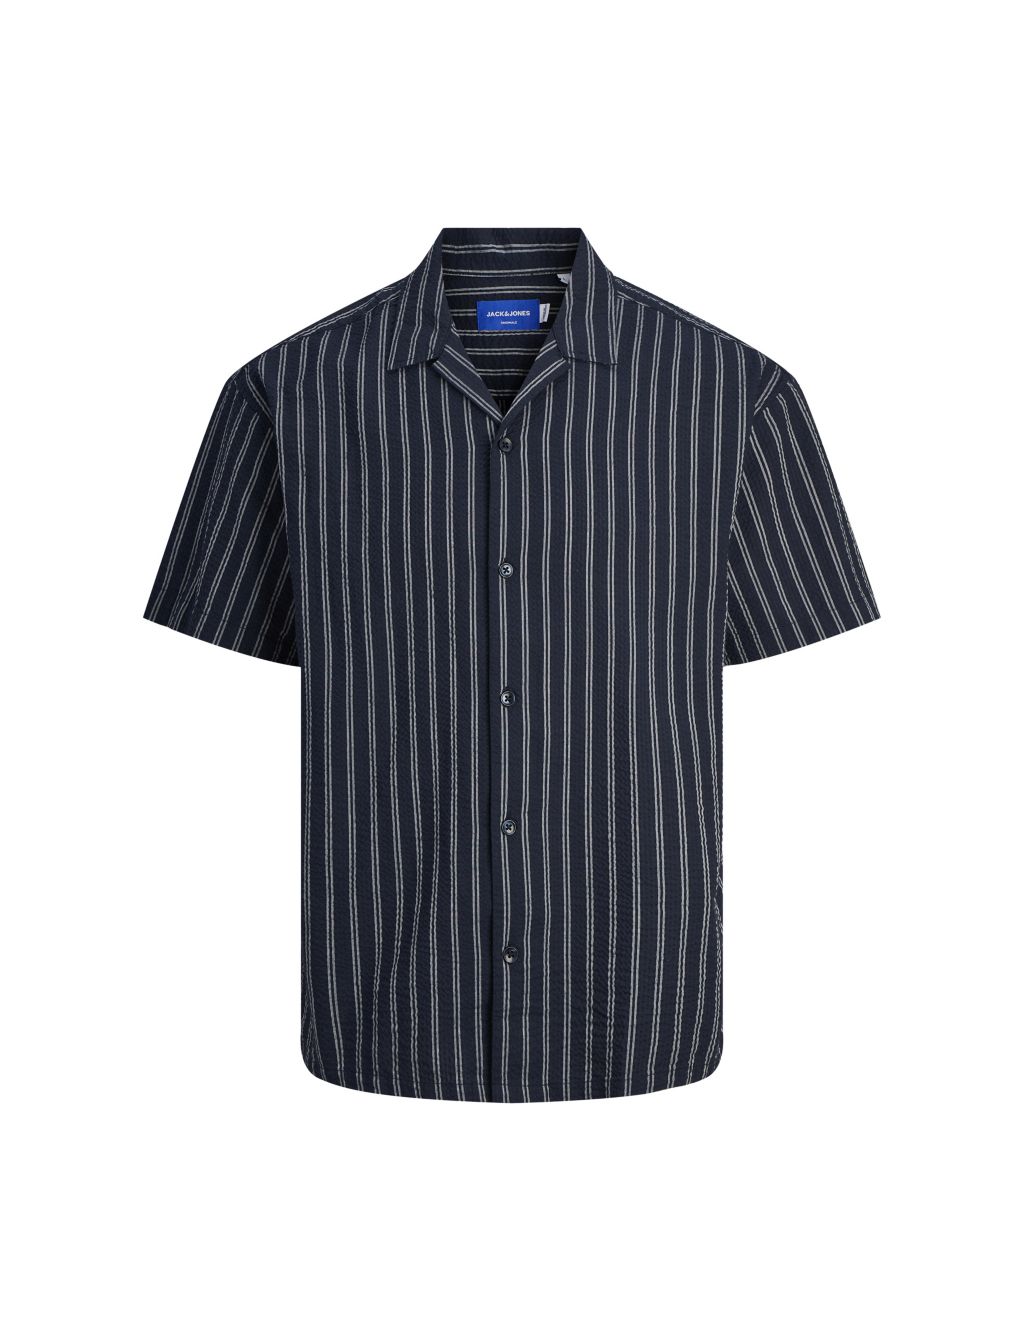 Cotton Blend Striped Shirt (8-16 Yrs)